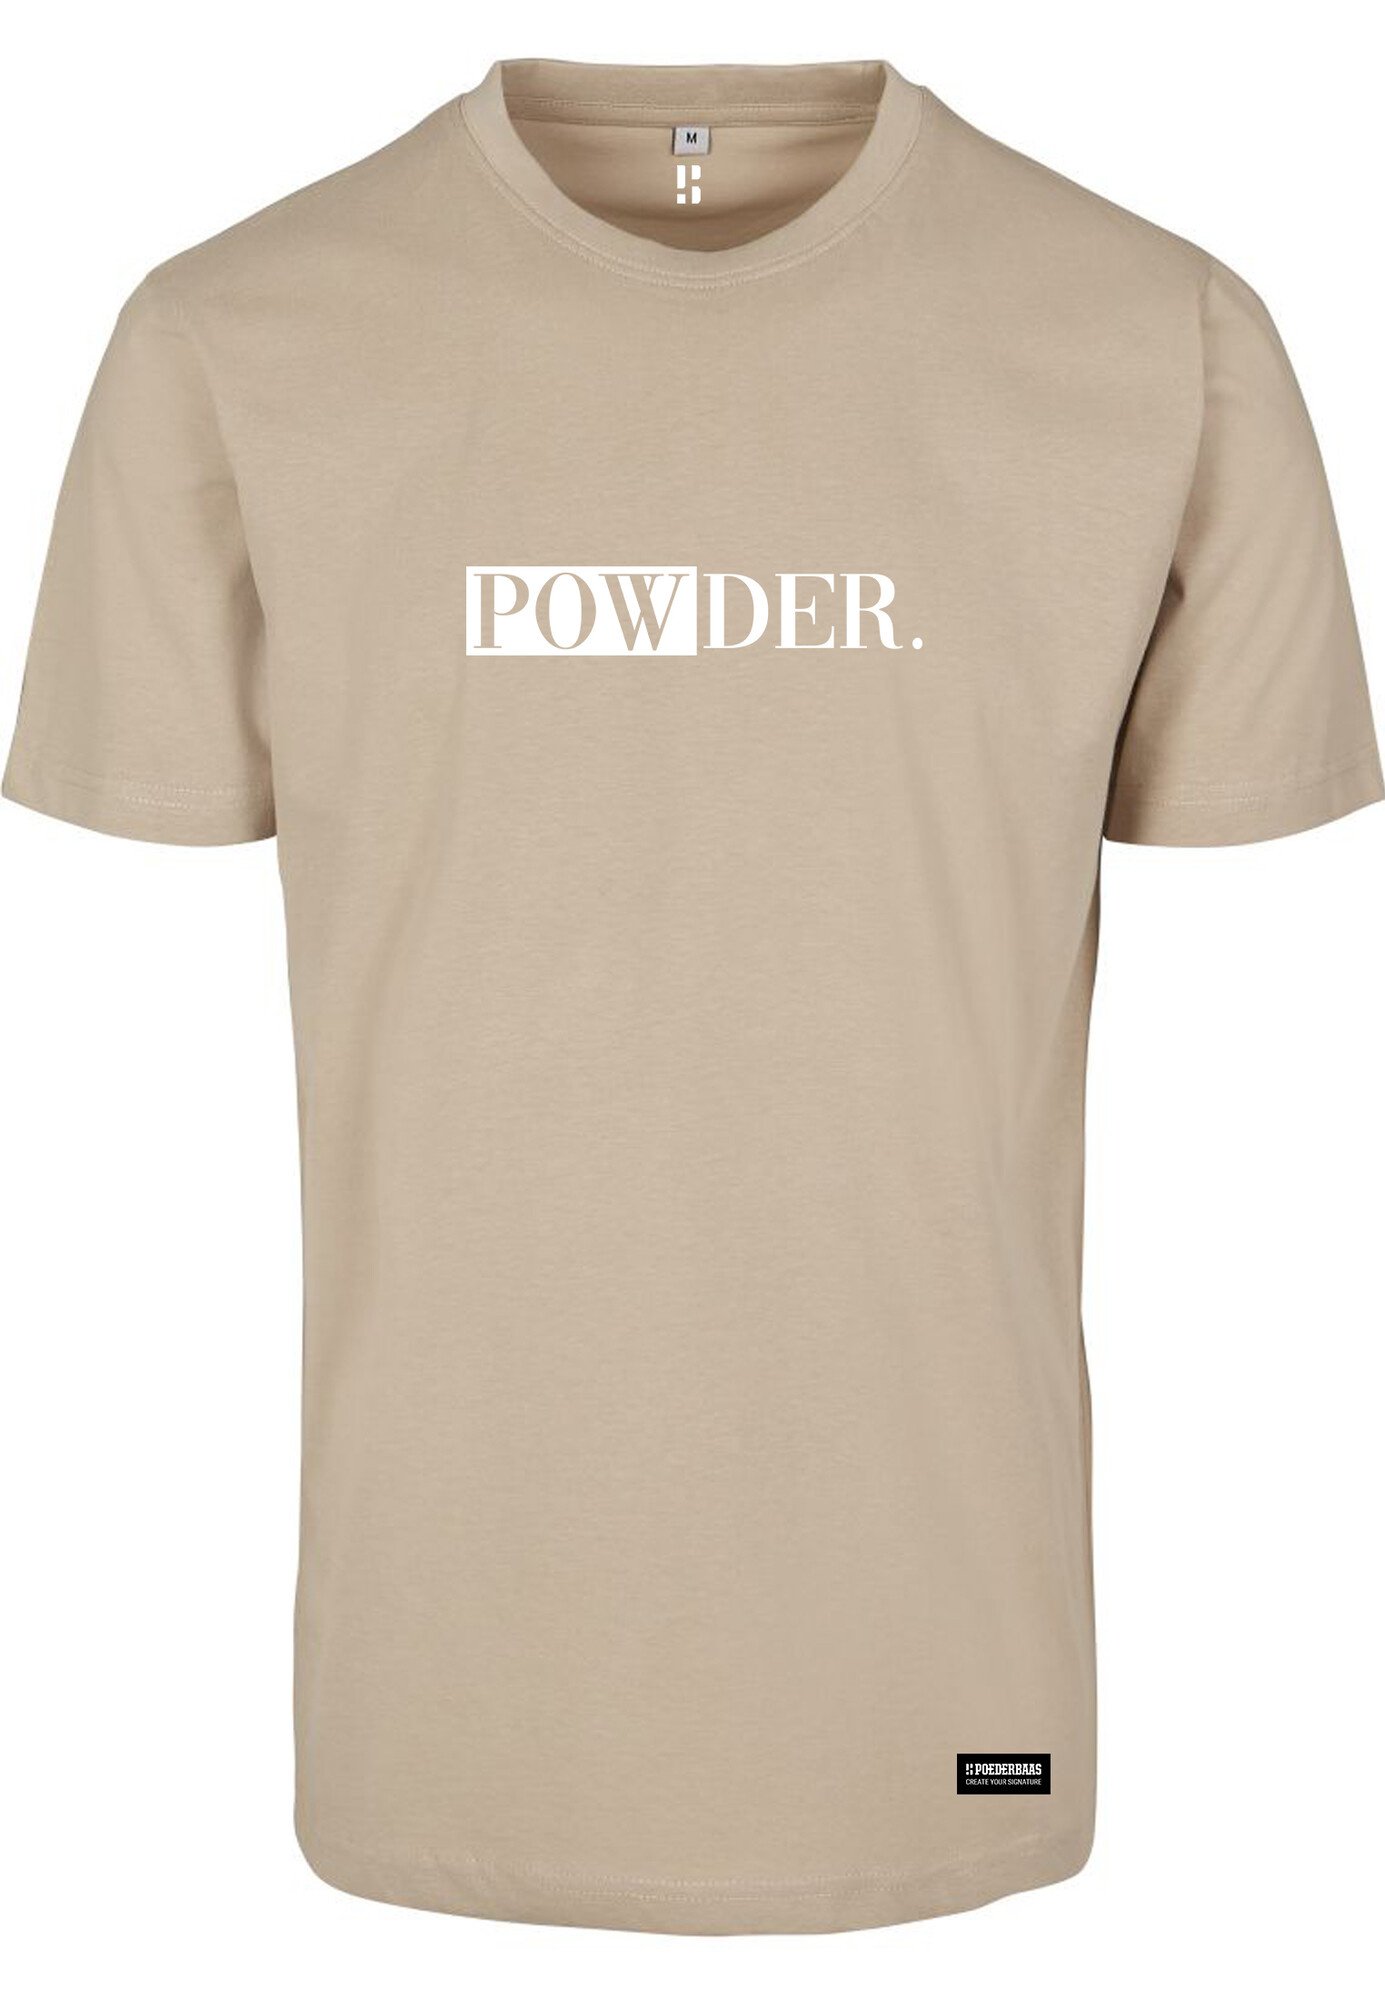 Powder T-shirt - Sandy